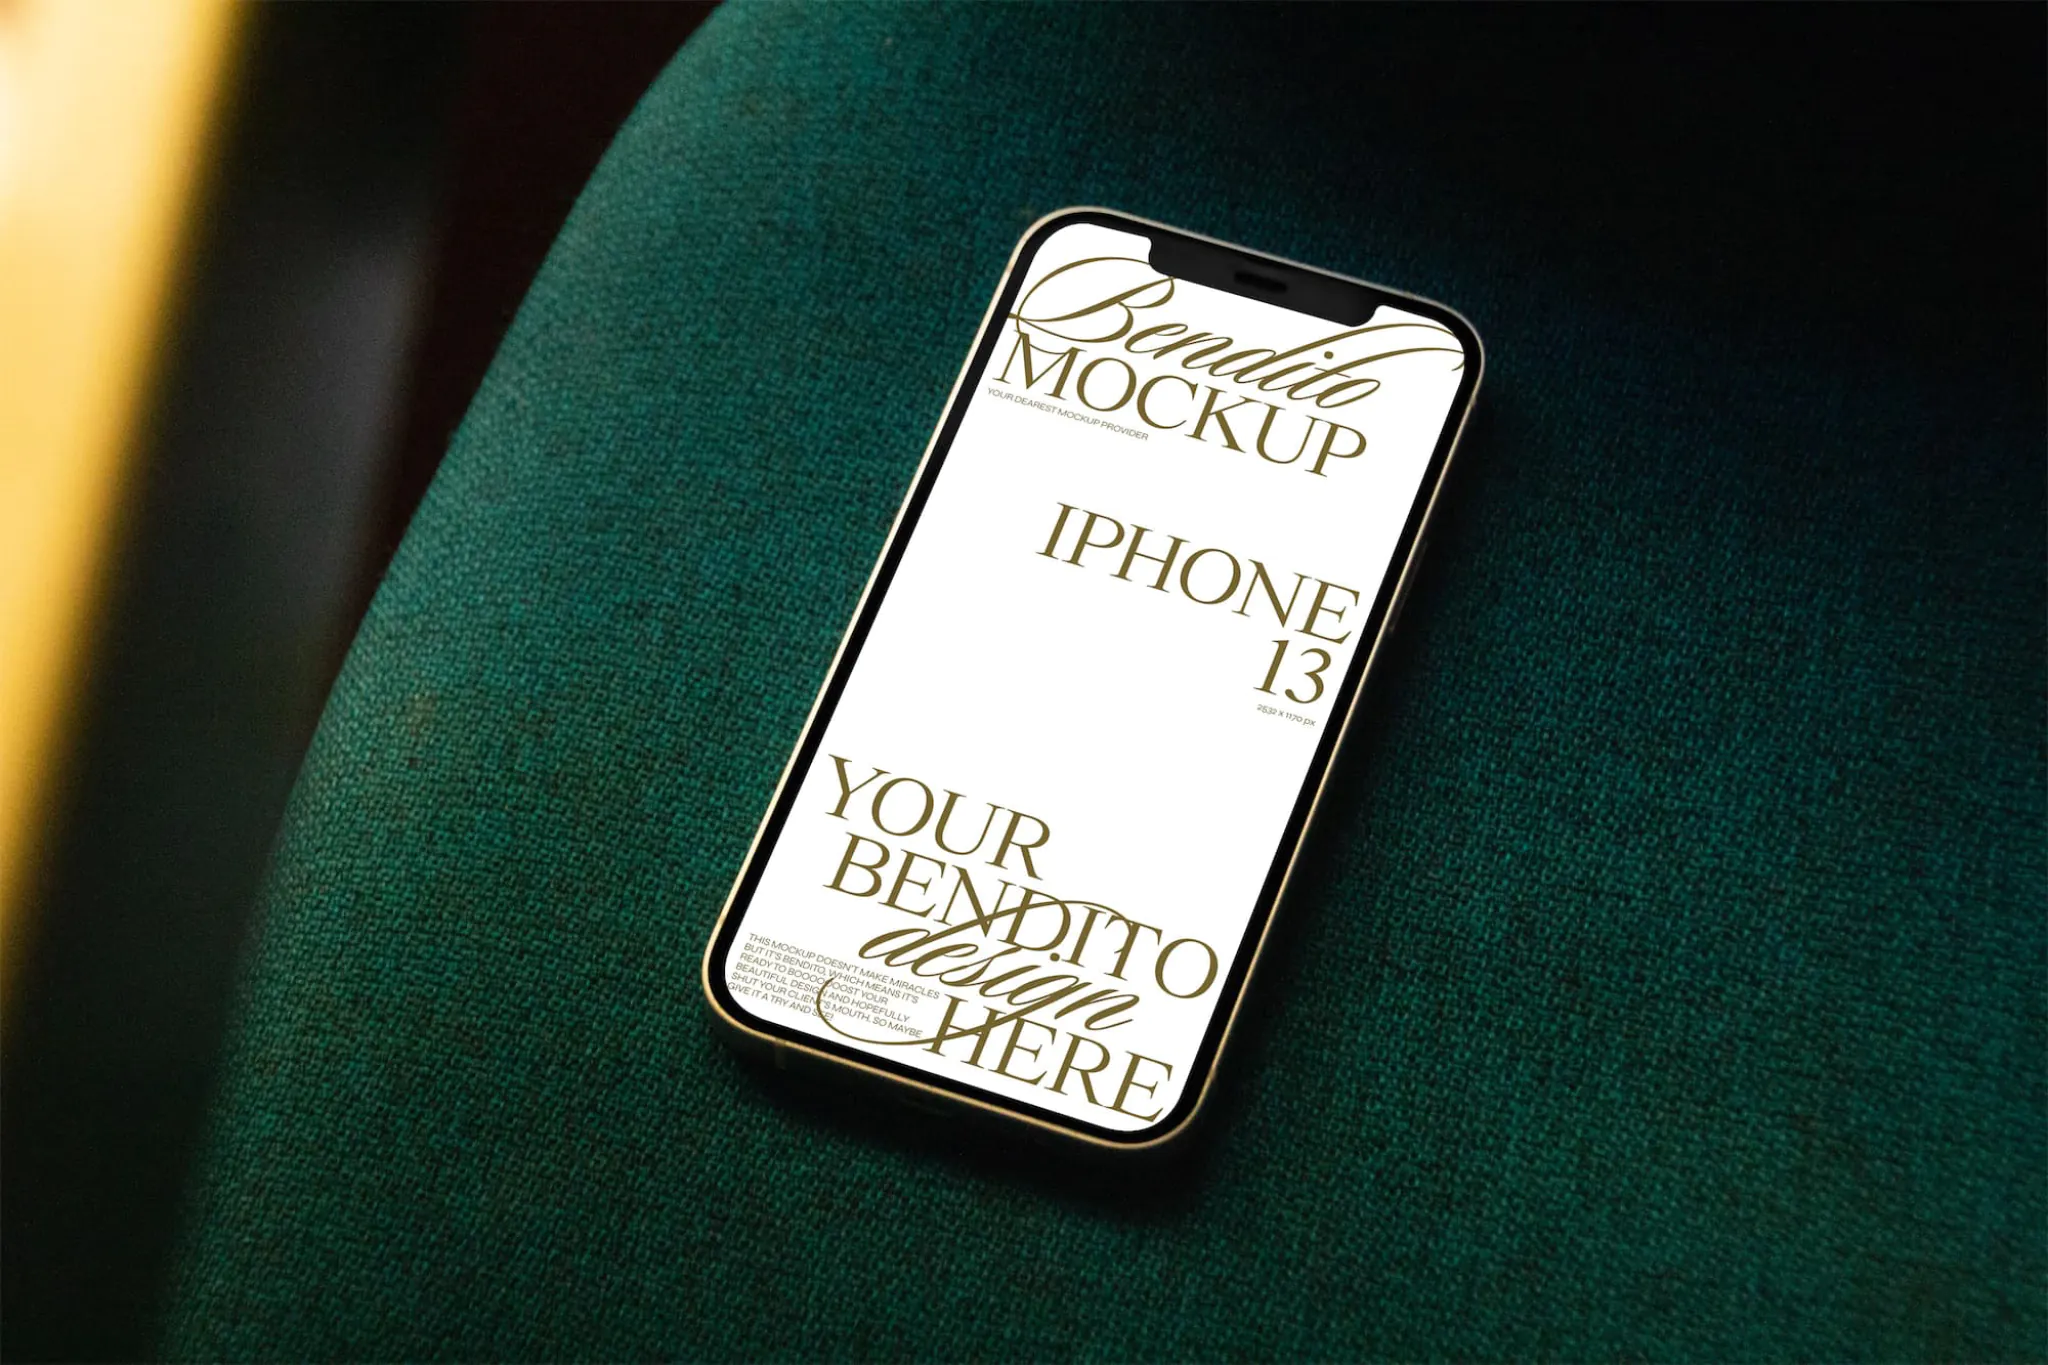 Iphone mockup on green elegant fabric background.